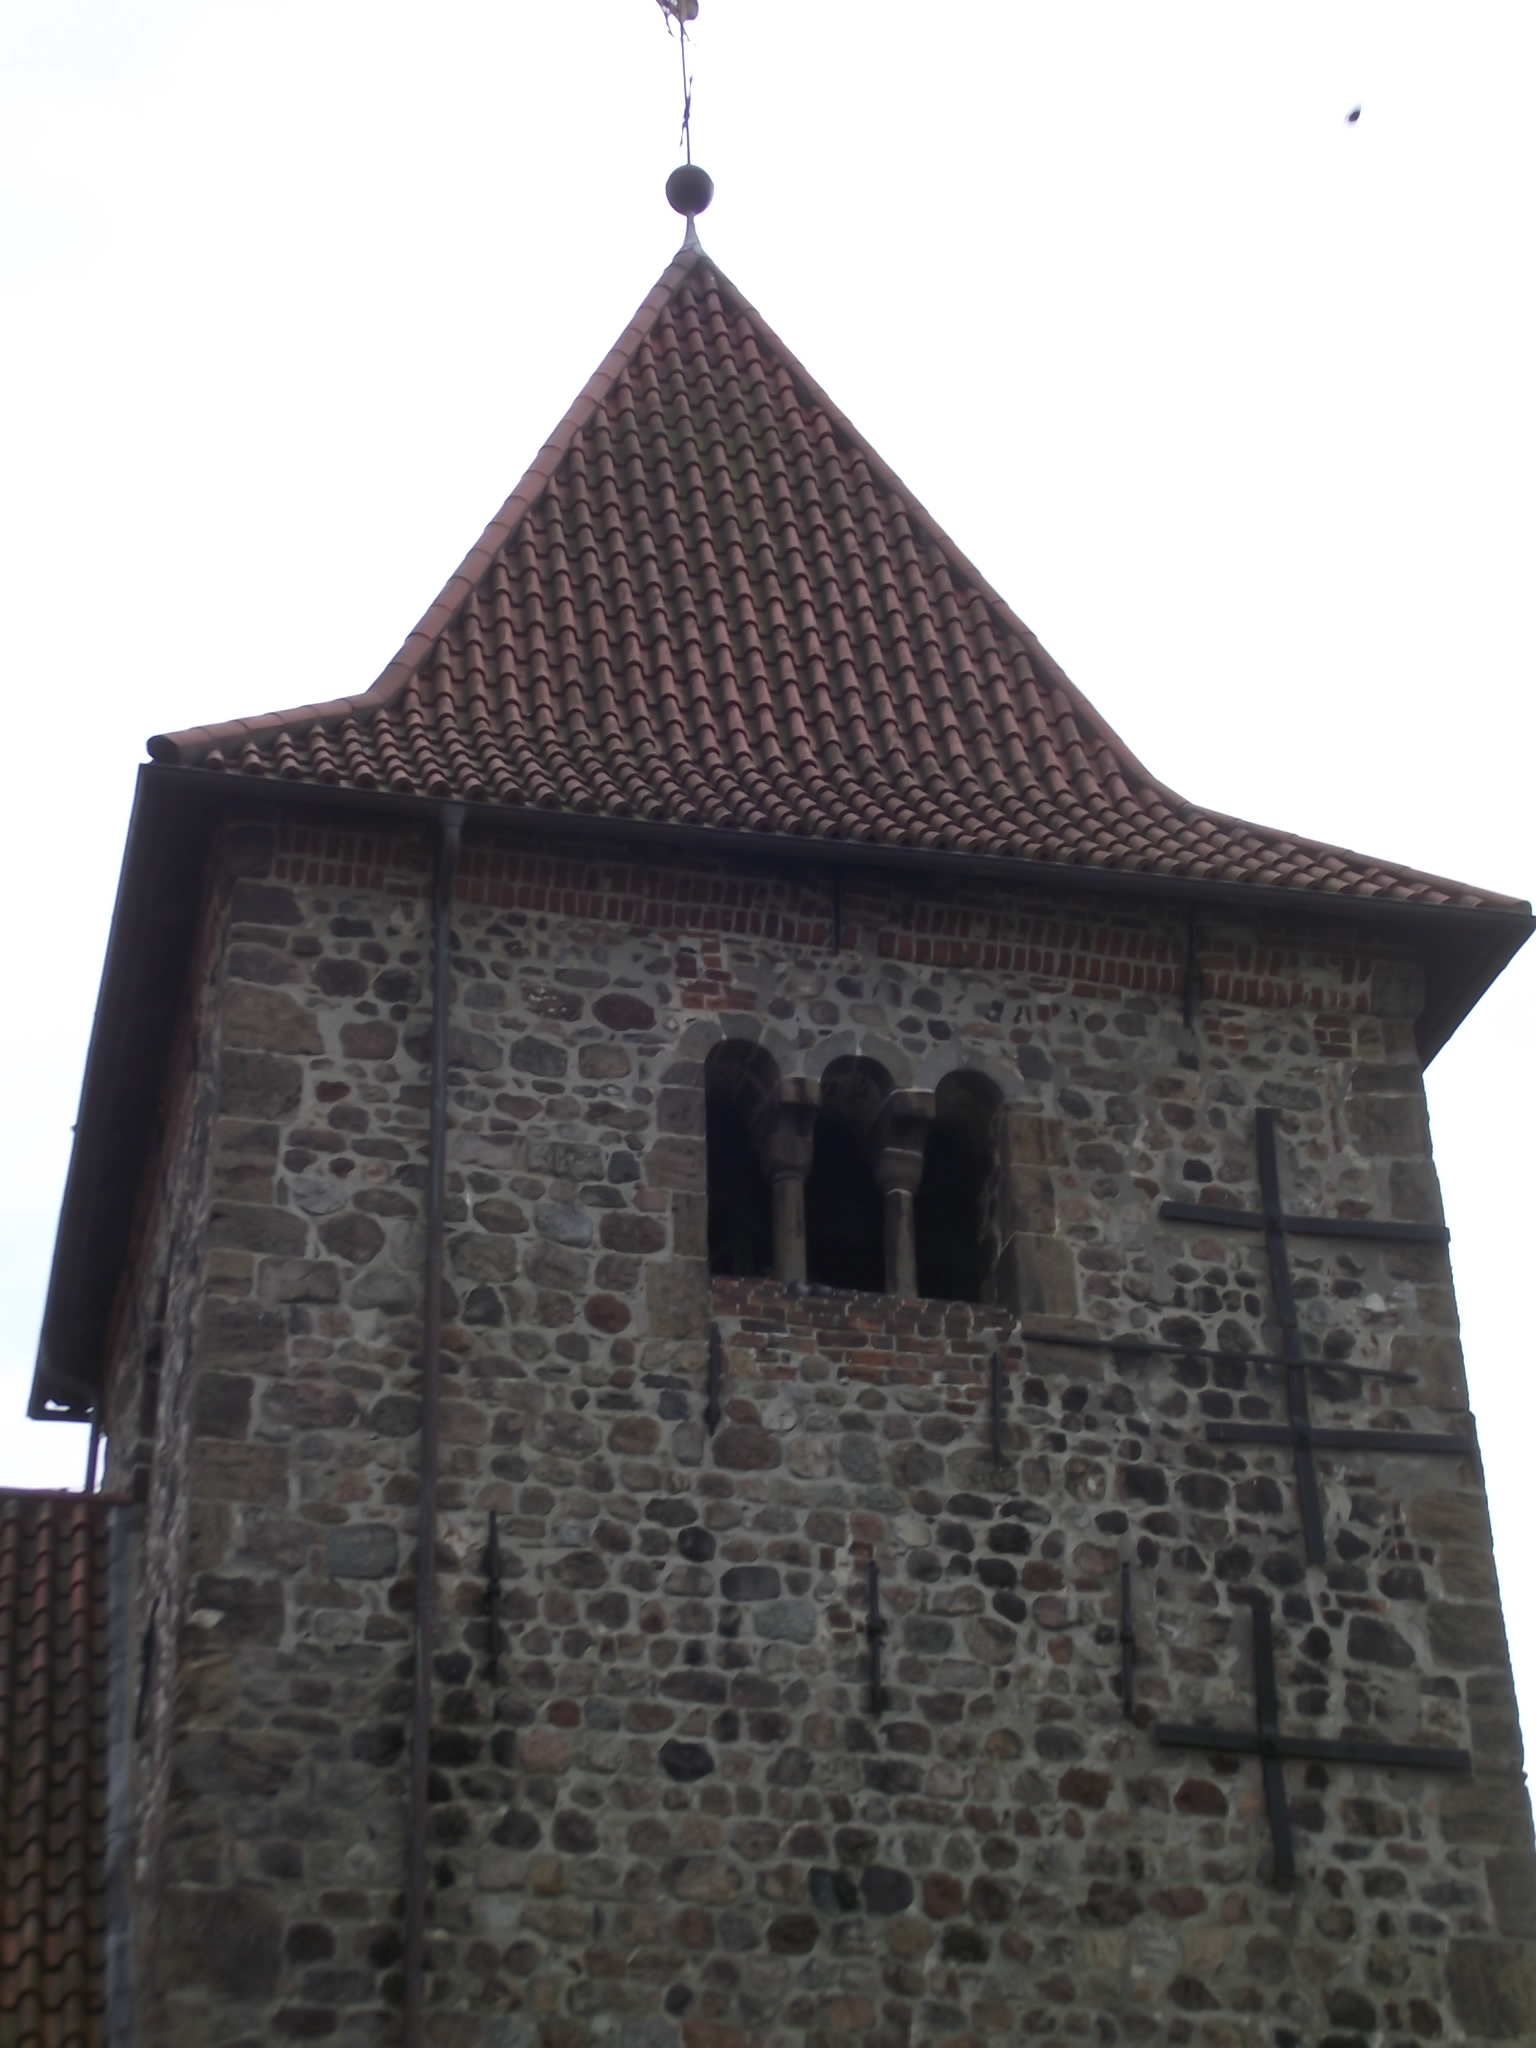 Kirchturm der St. Laurentius Kirche in Hasbergen